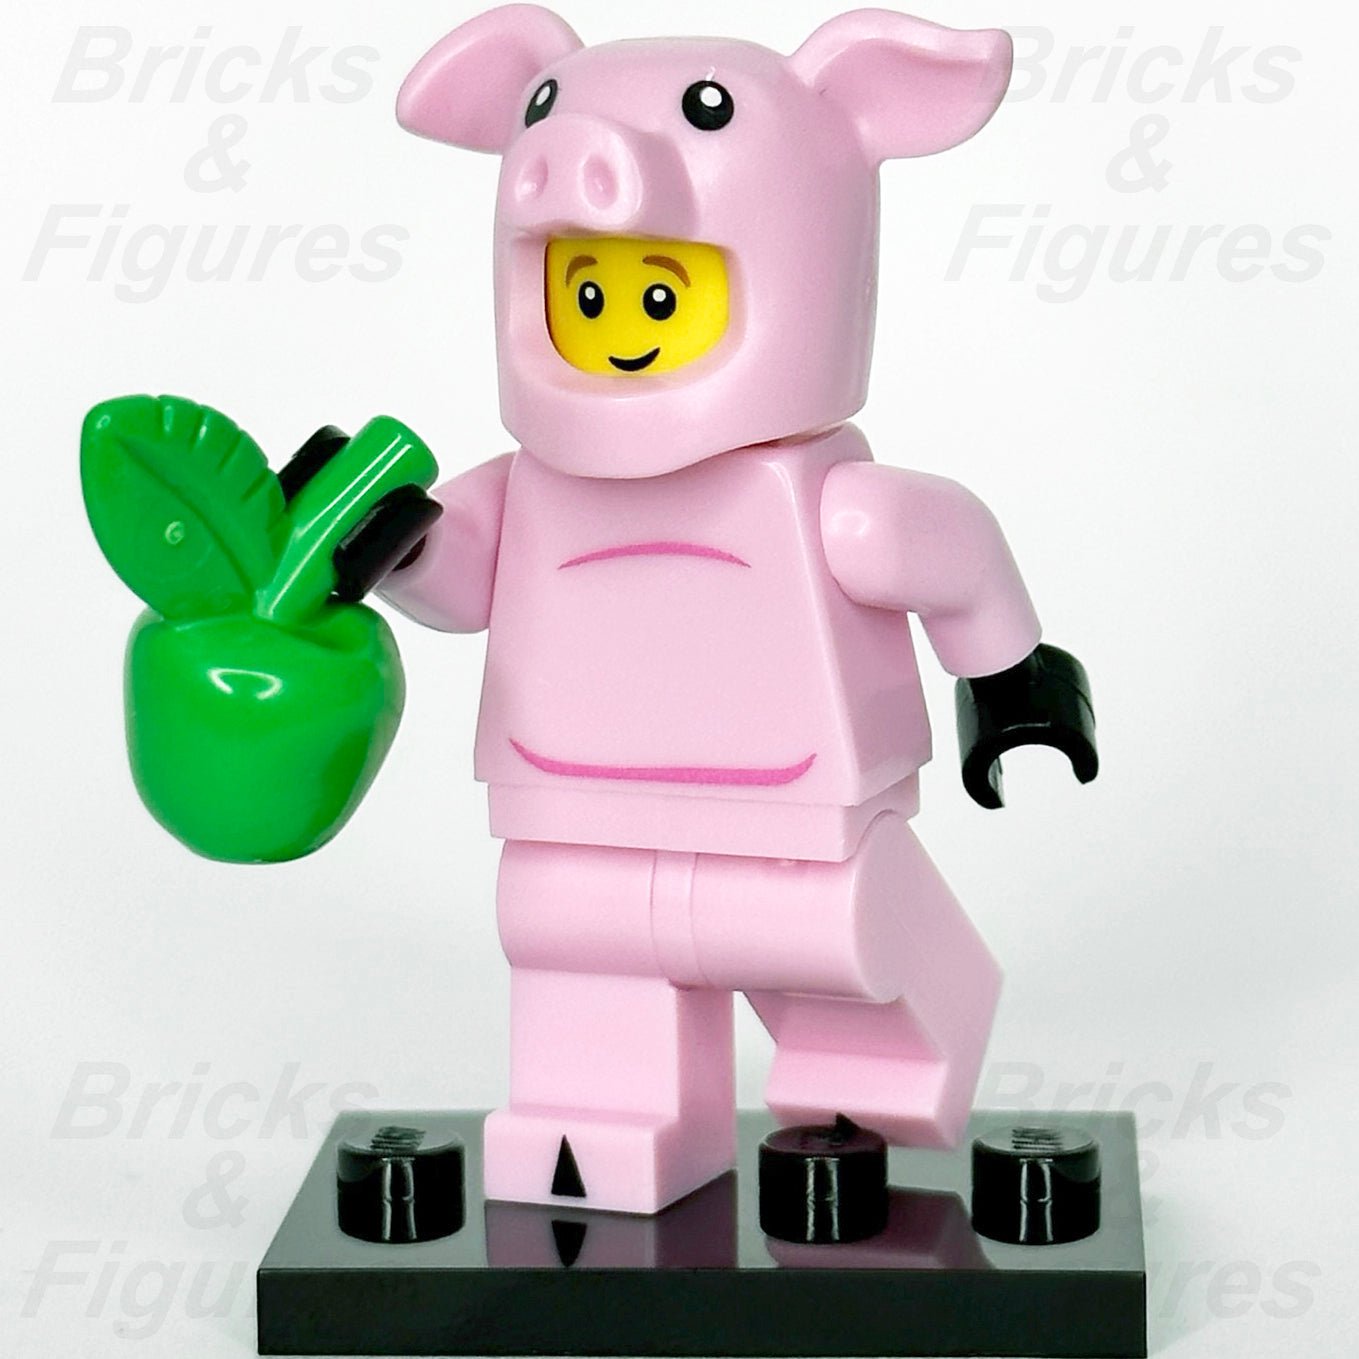 LEGO Collectible Minifigures, Buy Online